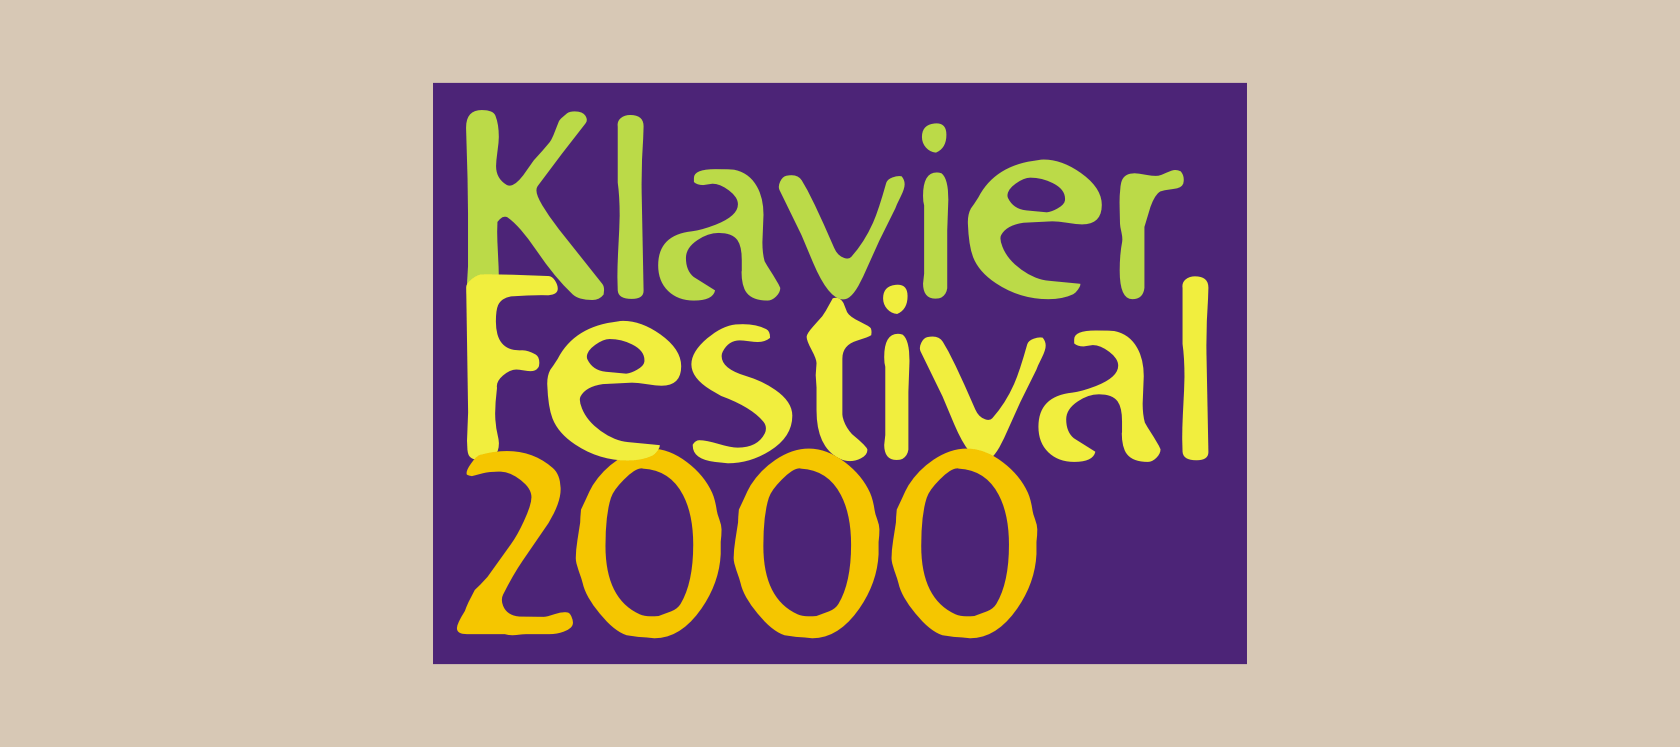 Logo - Klavier Festival 2000